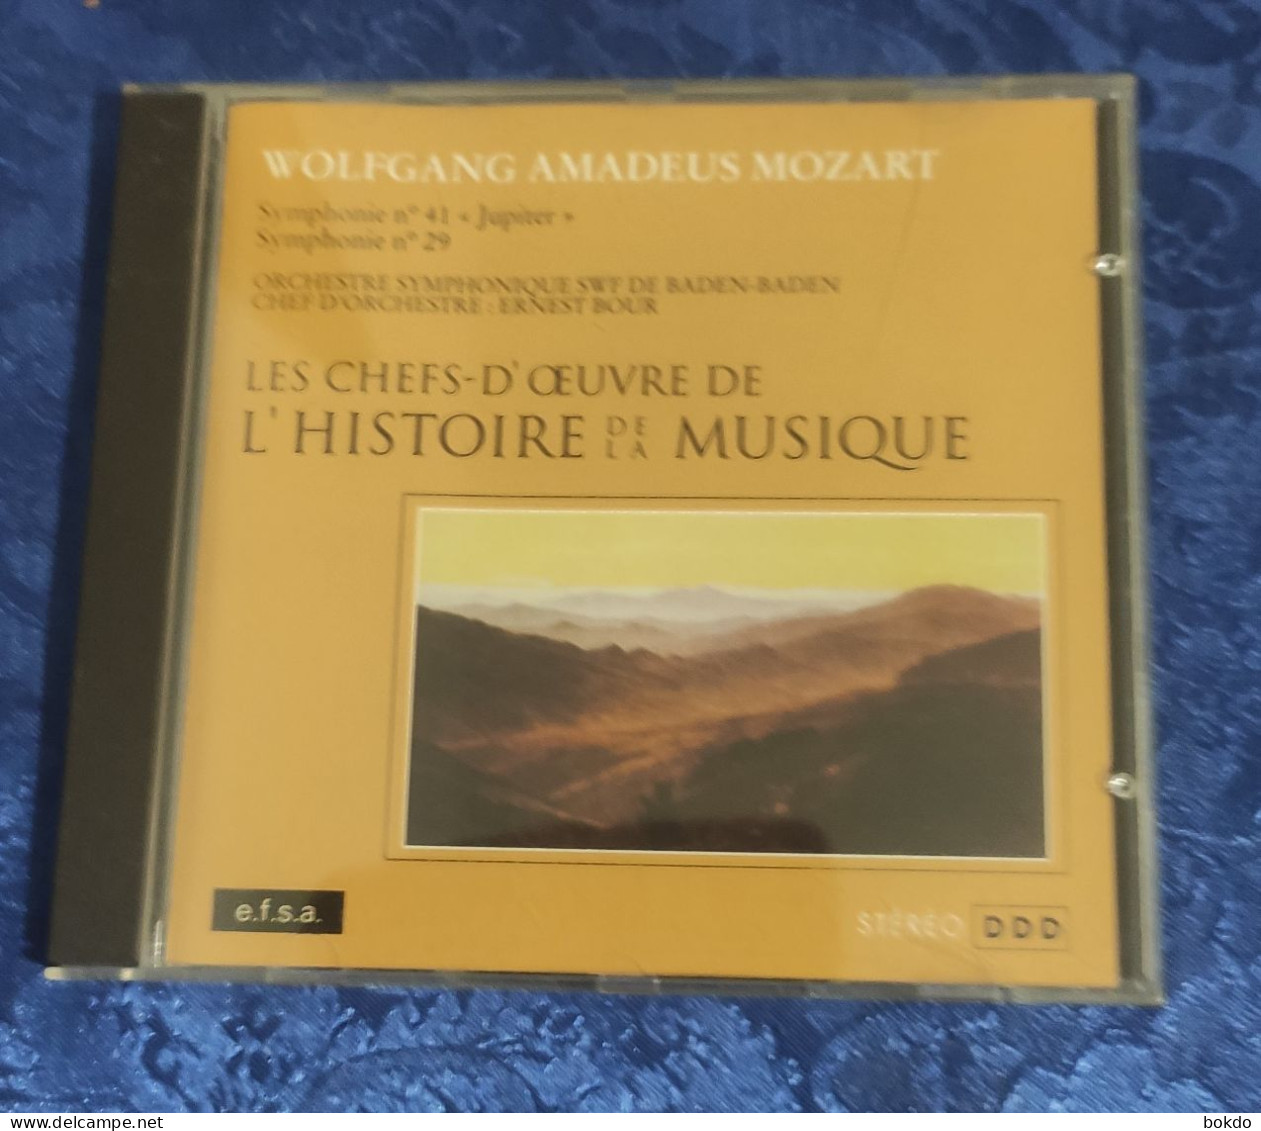 Mozart - Symphonie N° 41 Et N° 29 - Classica